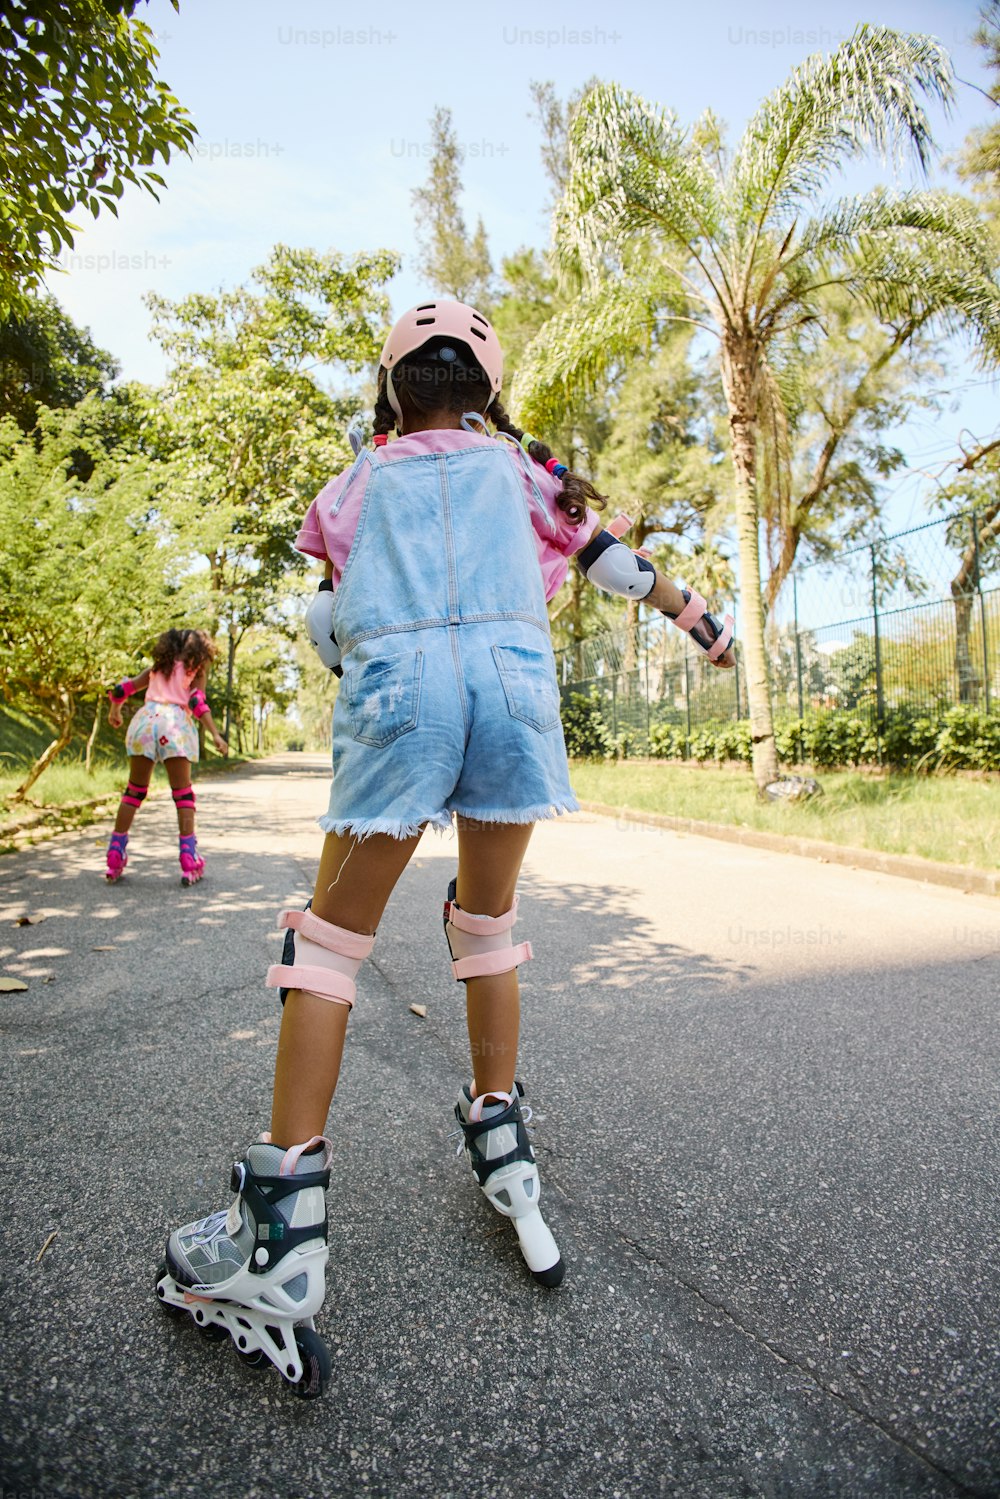 a young girl riding a skateboard down a street